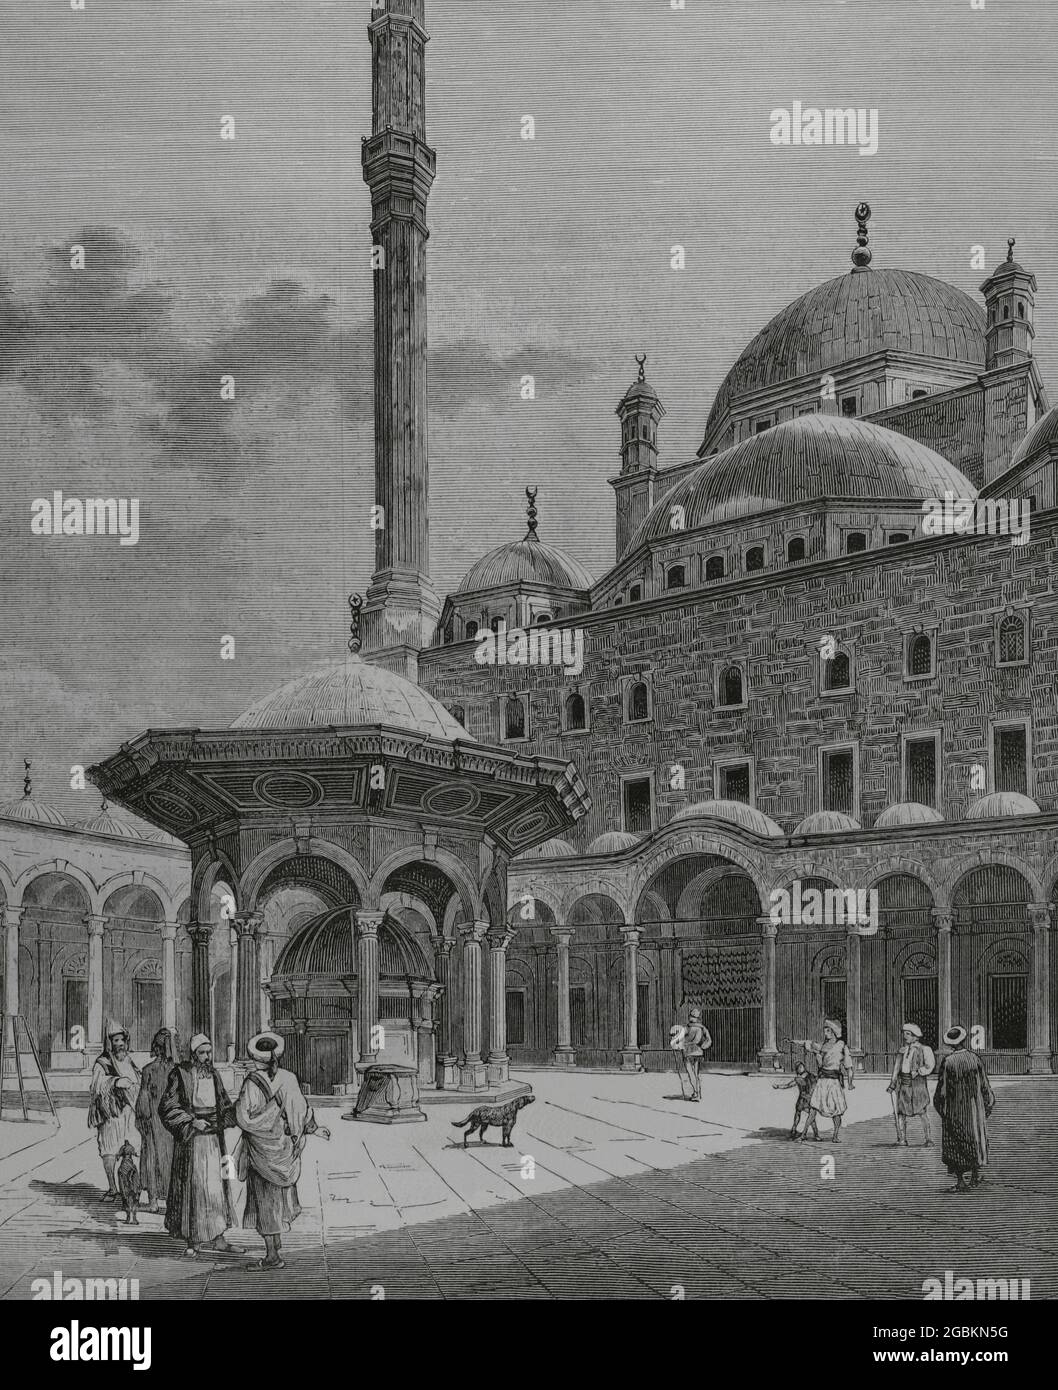 Egypt, Cairo. Courtyard and ablution fountain in the Mosque-Madrasa of Sultan Hassan. Engraving. La Ilustración Española y Americana, 1882. Stock Photo